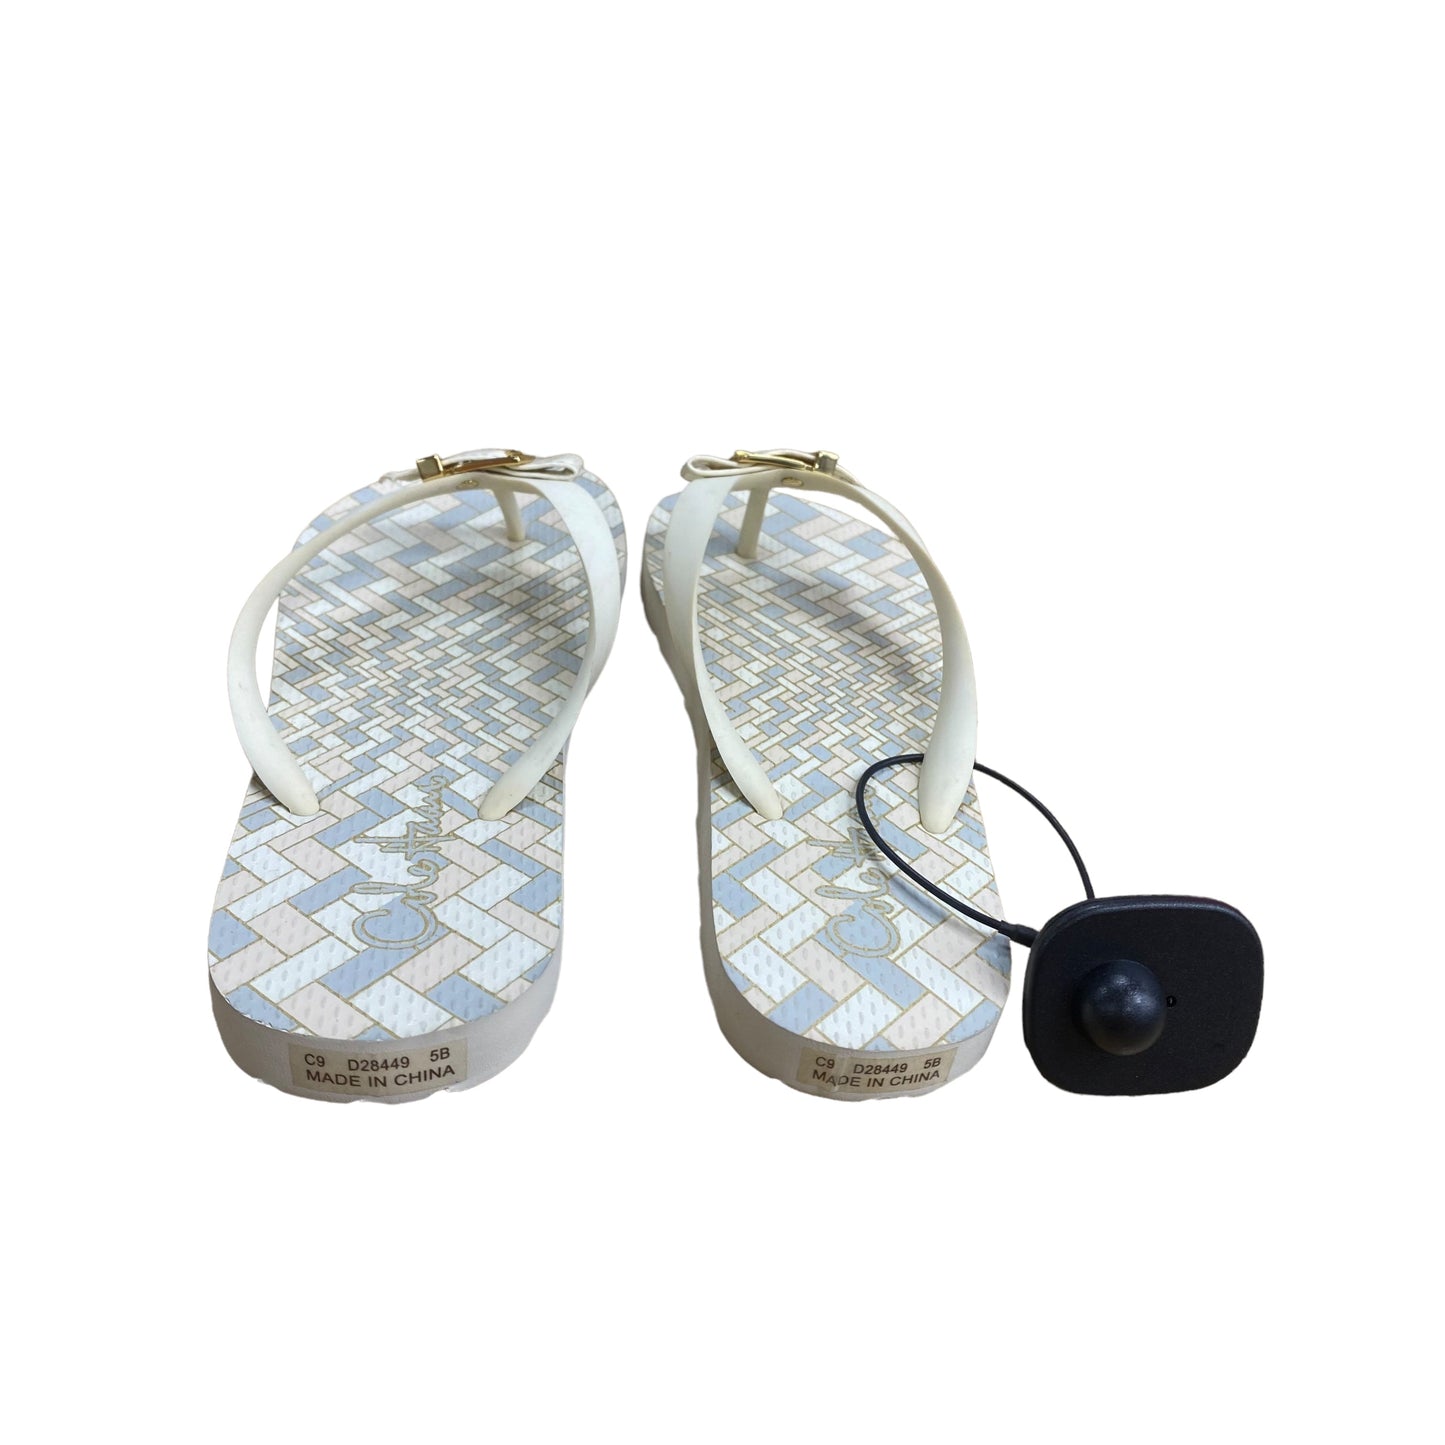 Sandals Flip Flops By Cole-haan  Size: 5